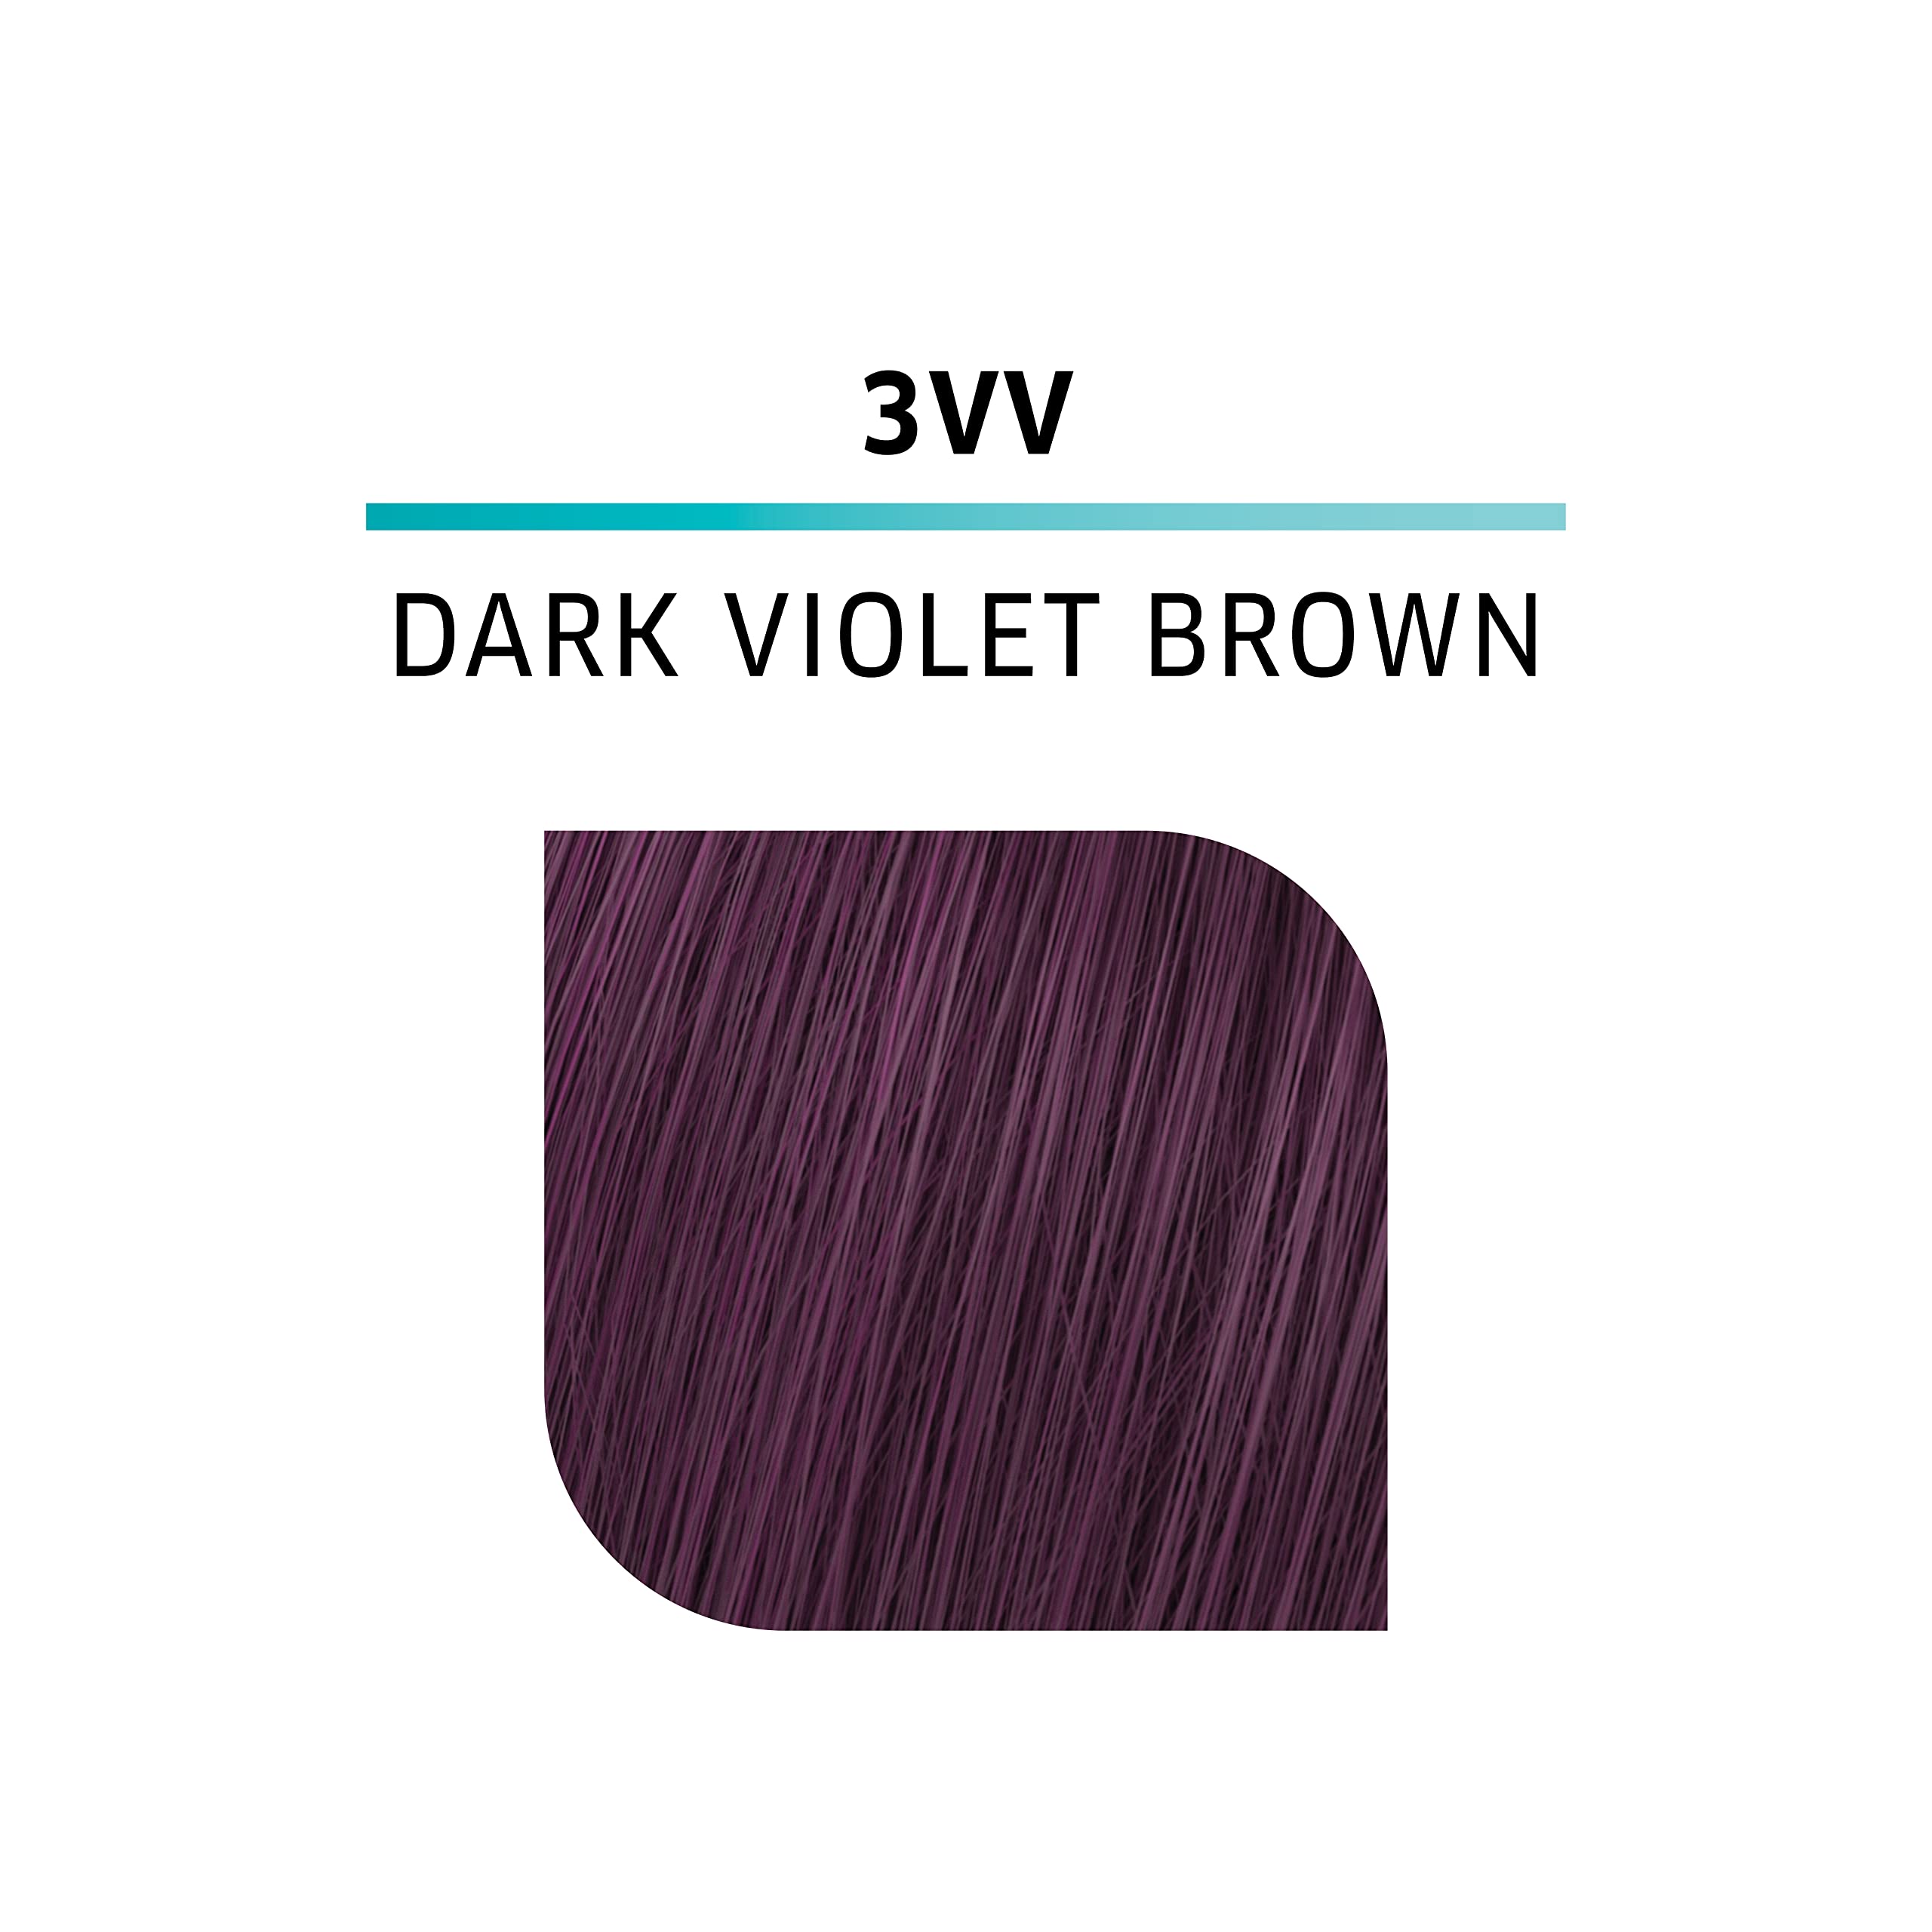 WELLA Color Charm Demi Permanent Hair Color, 3VV Dark Violet Brown 2 oz